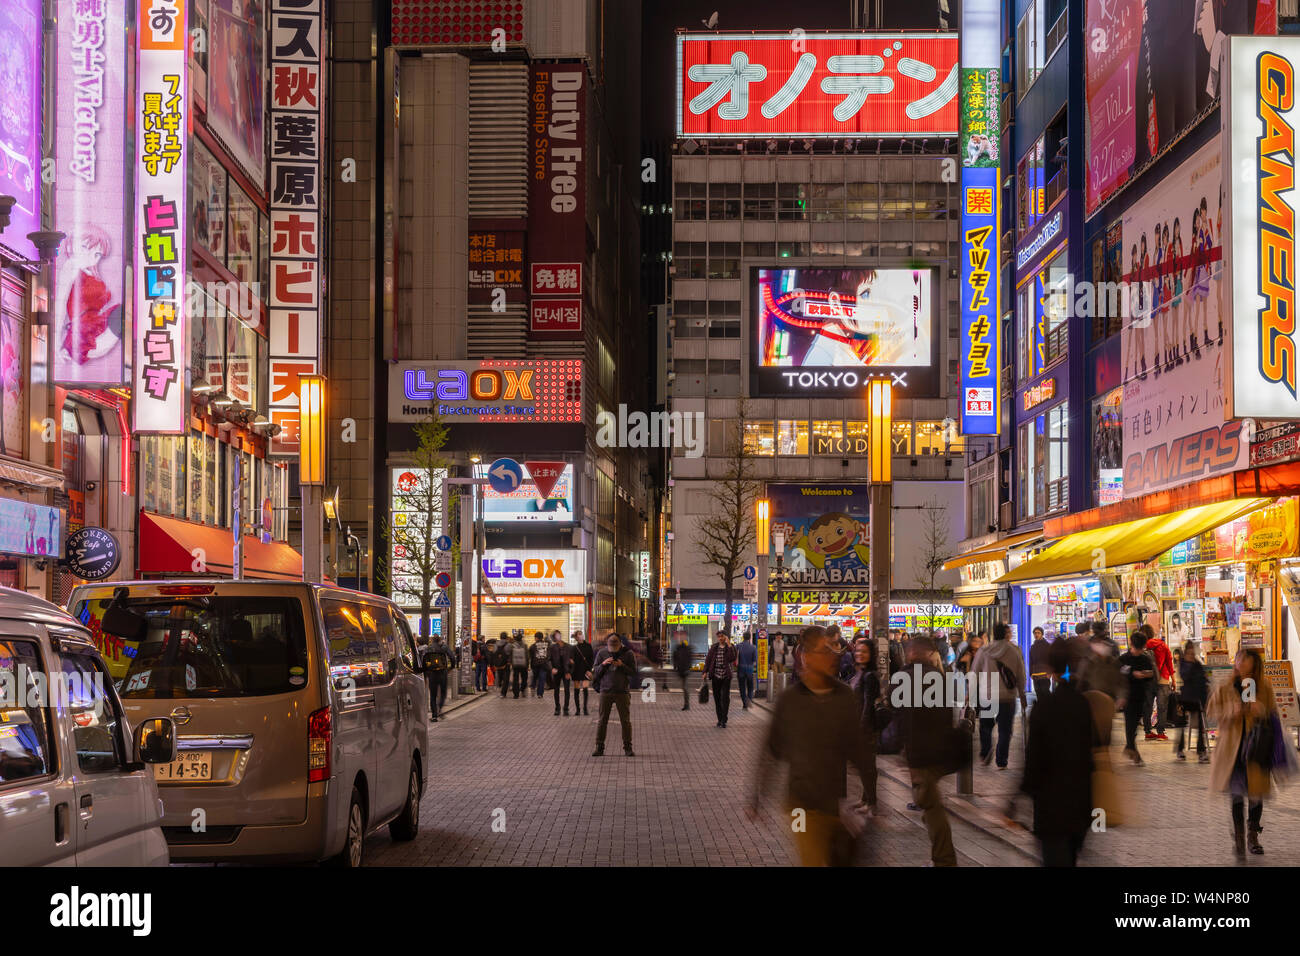 The futuristic neon night lights of Akihabara Electric Town shopping district, Tokyo, Japan. Stock Photo